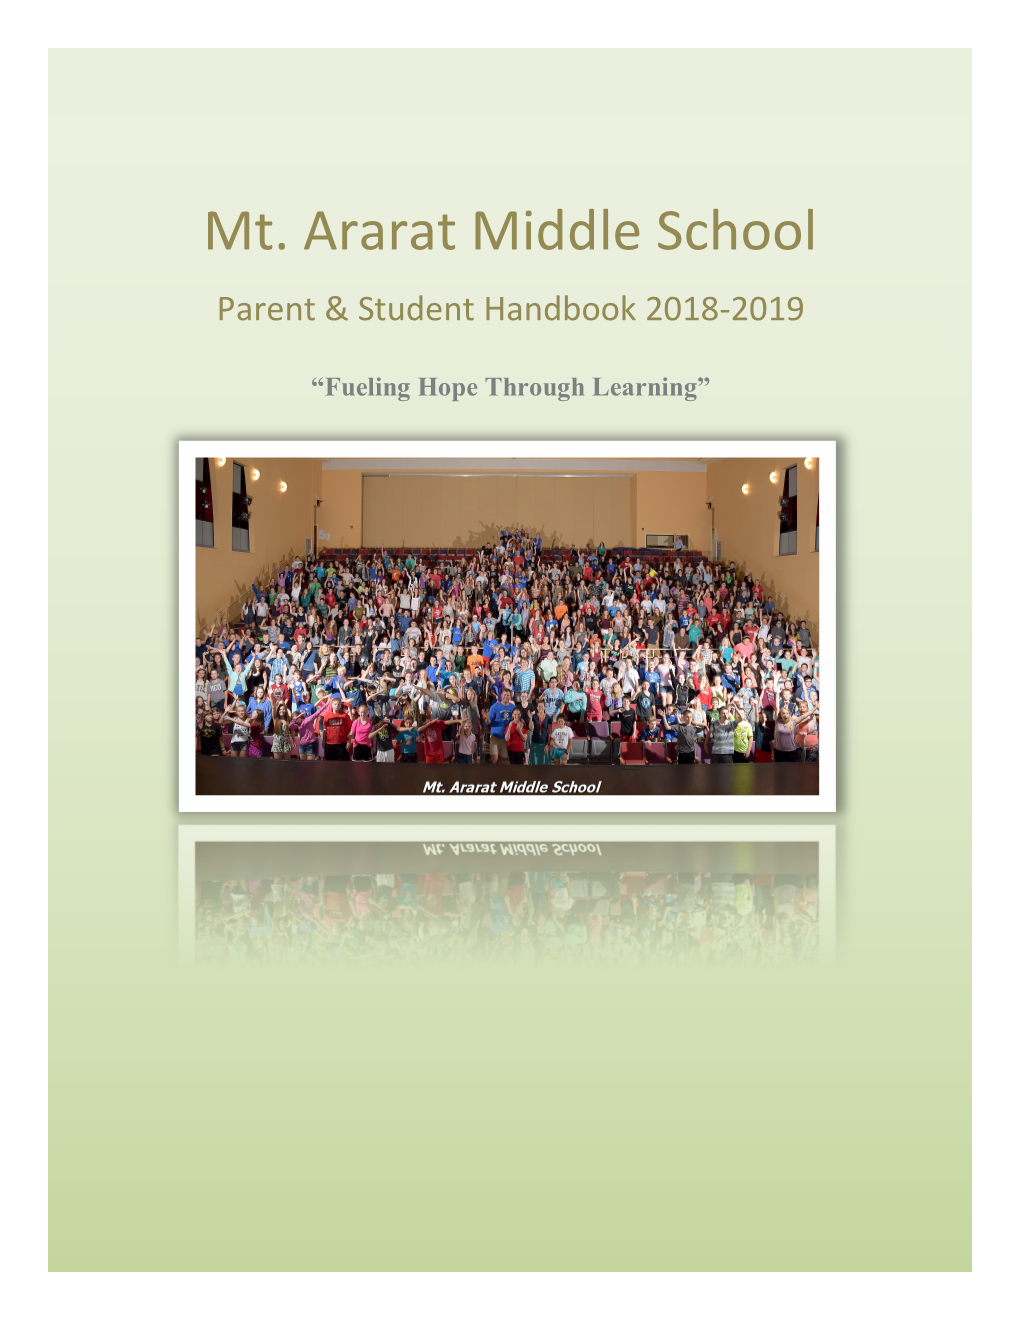 Parent & Student Handbook 2018-2019